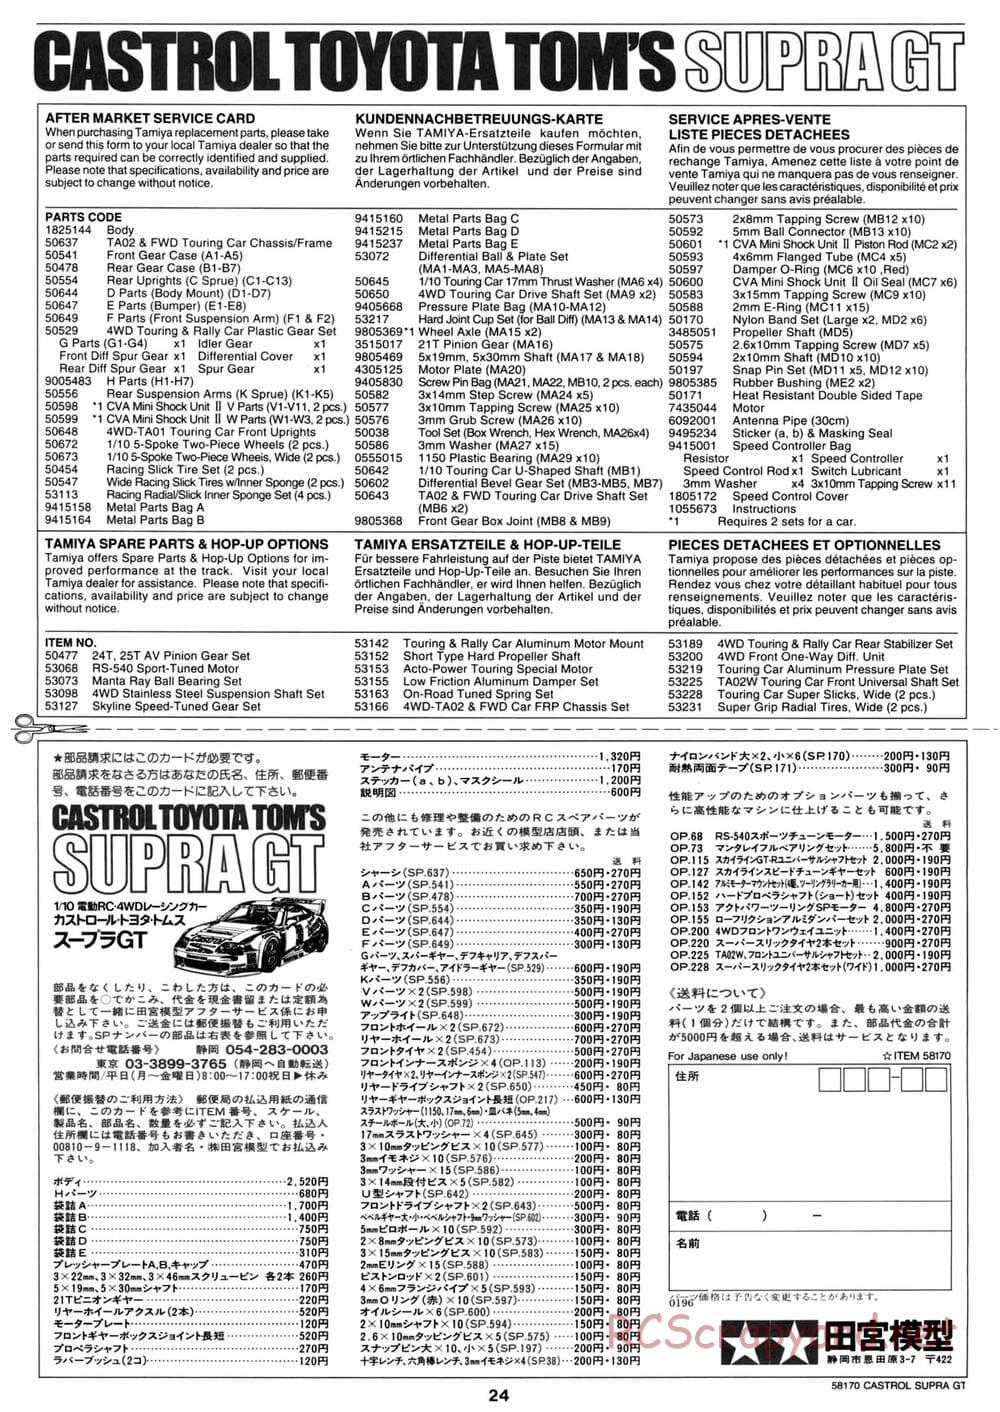 Tamiya - Castrol Toyota Tom's Supra GT - TA-02W Chassis - Manual - Page 24